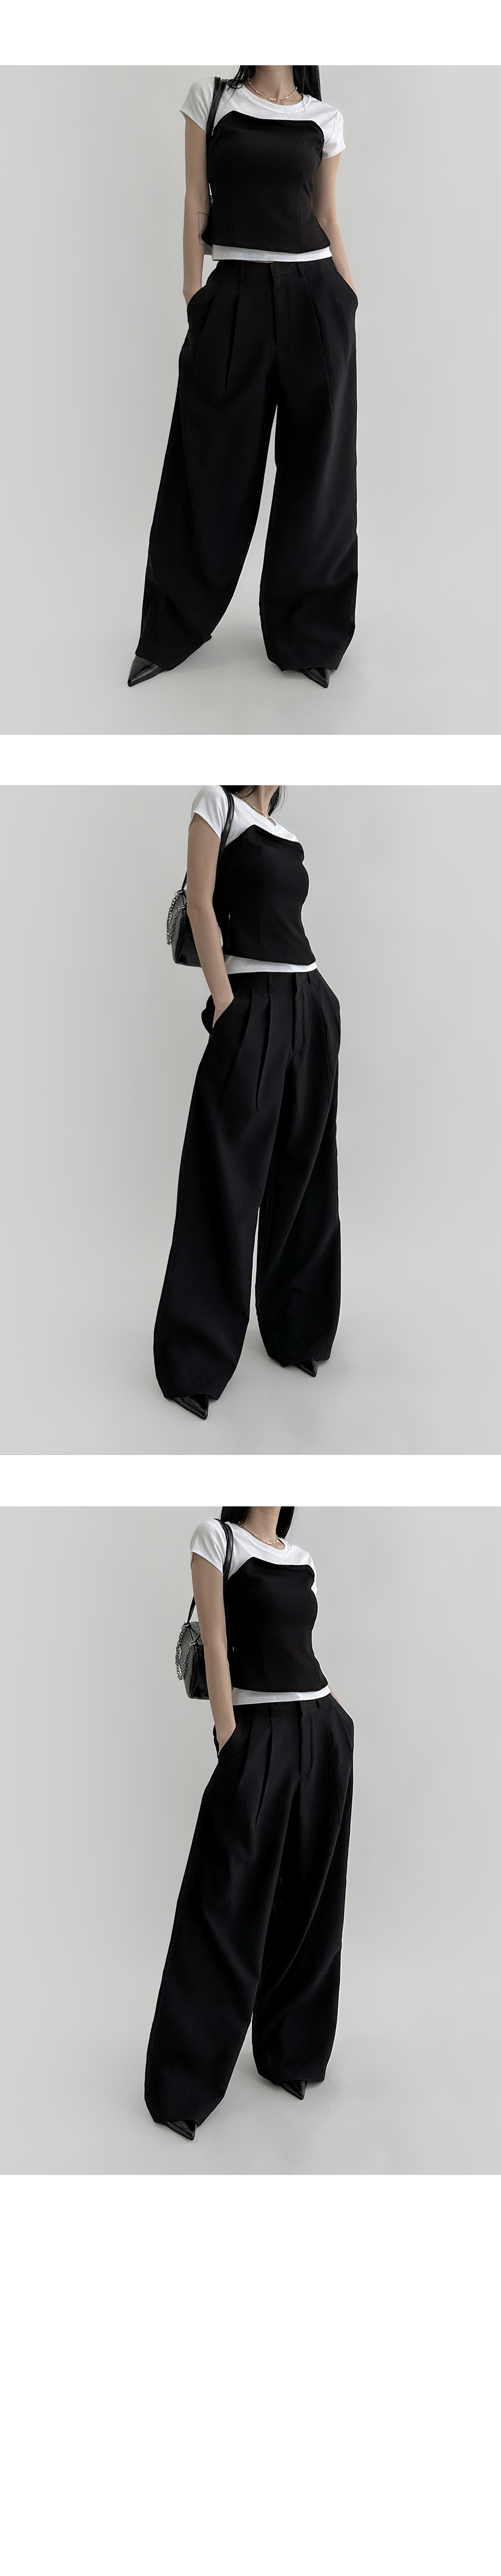 suspenders skirt/pants product image-S1L12